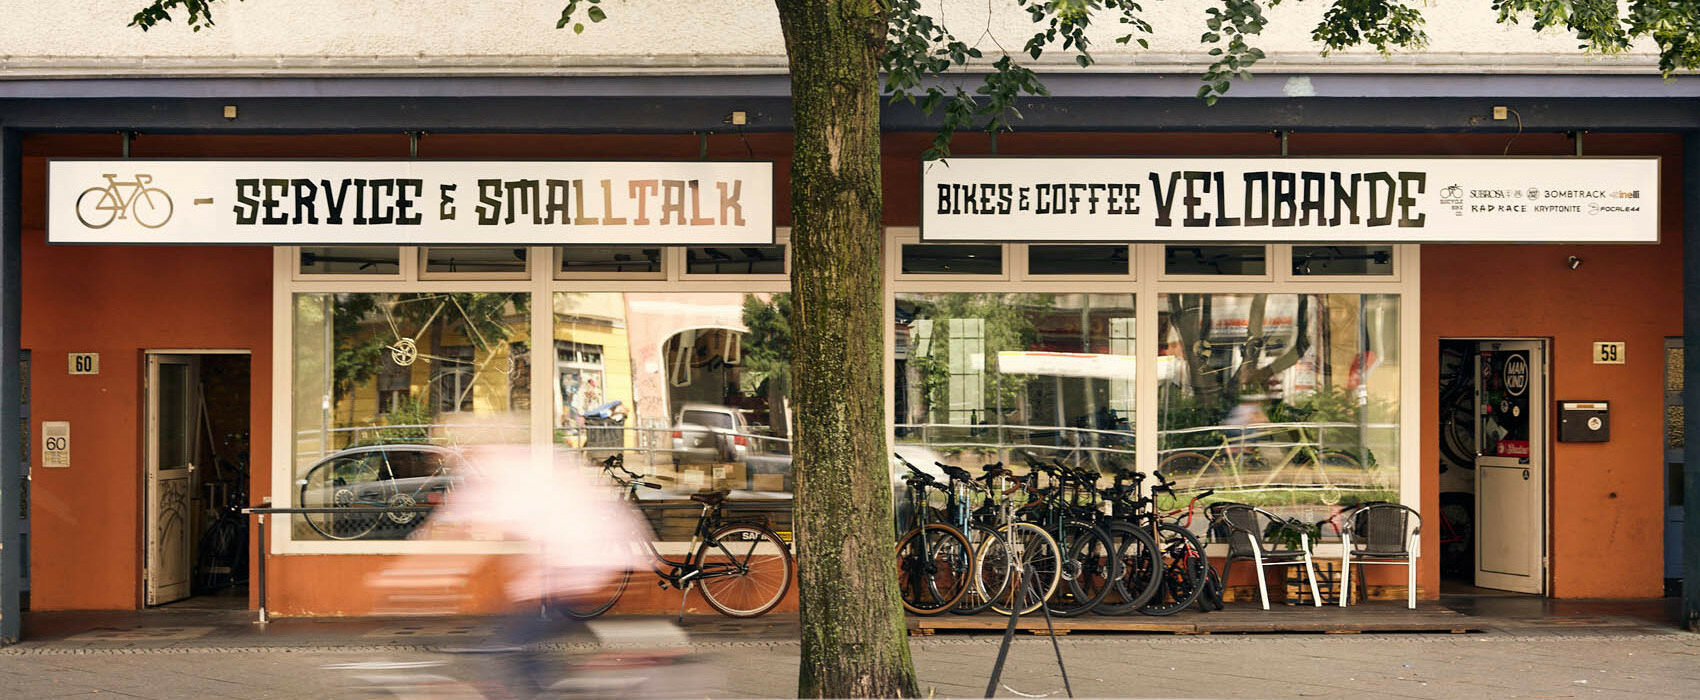 Velobande Bikes and Coffee - Service & Smalltalk